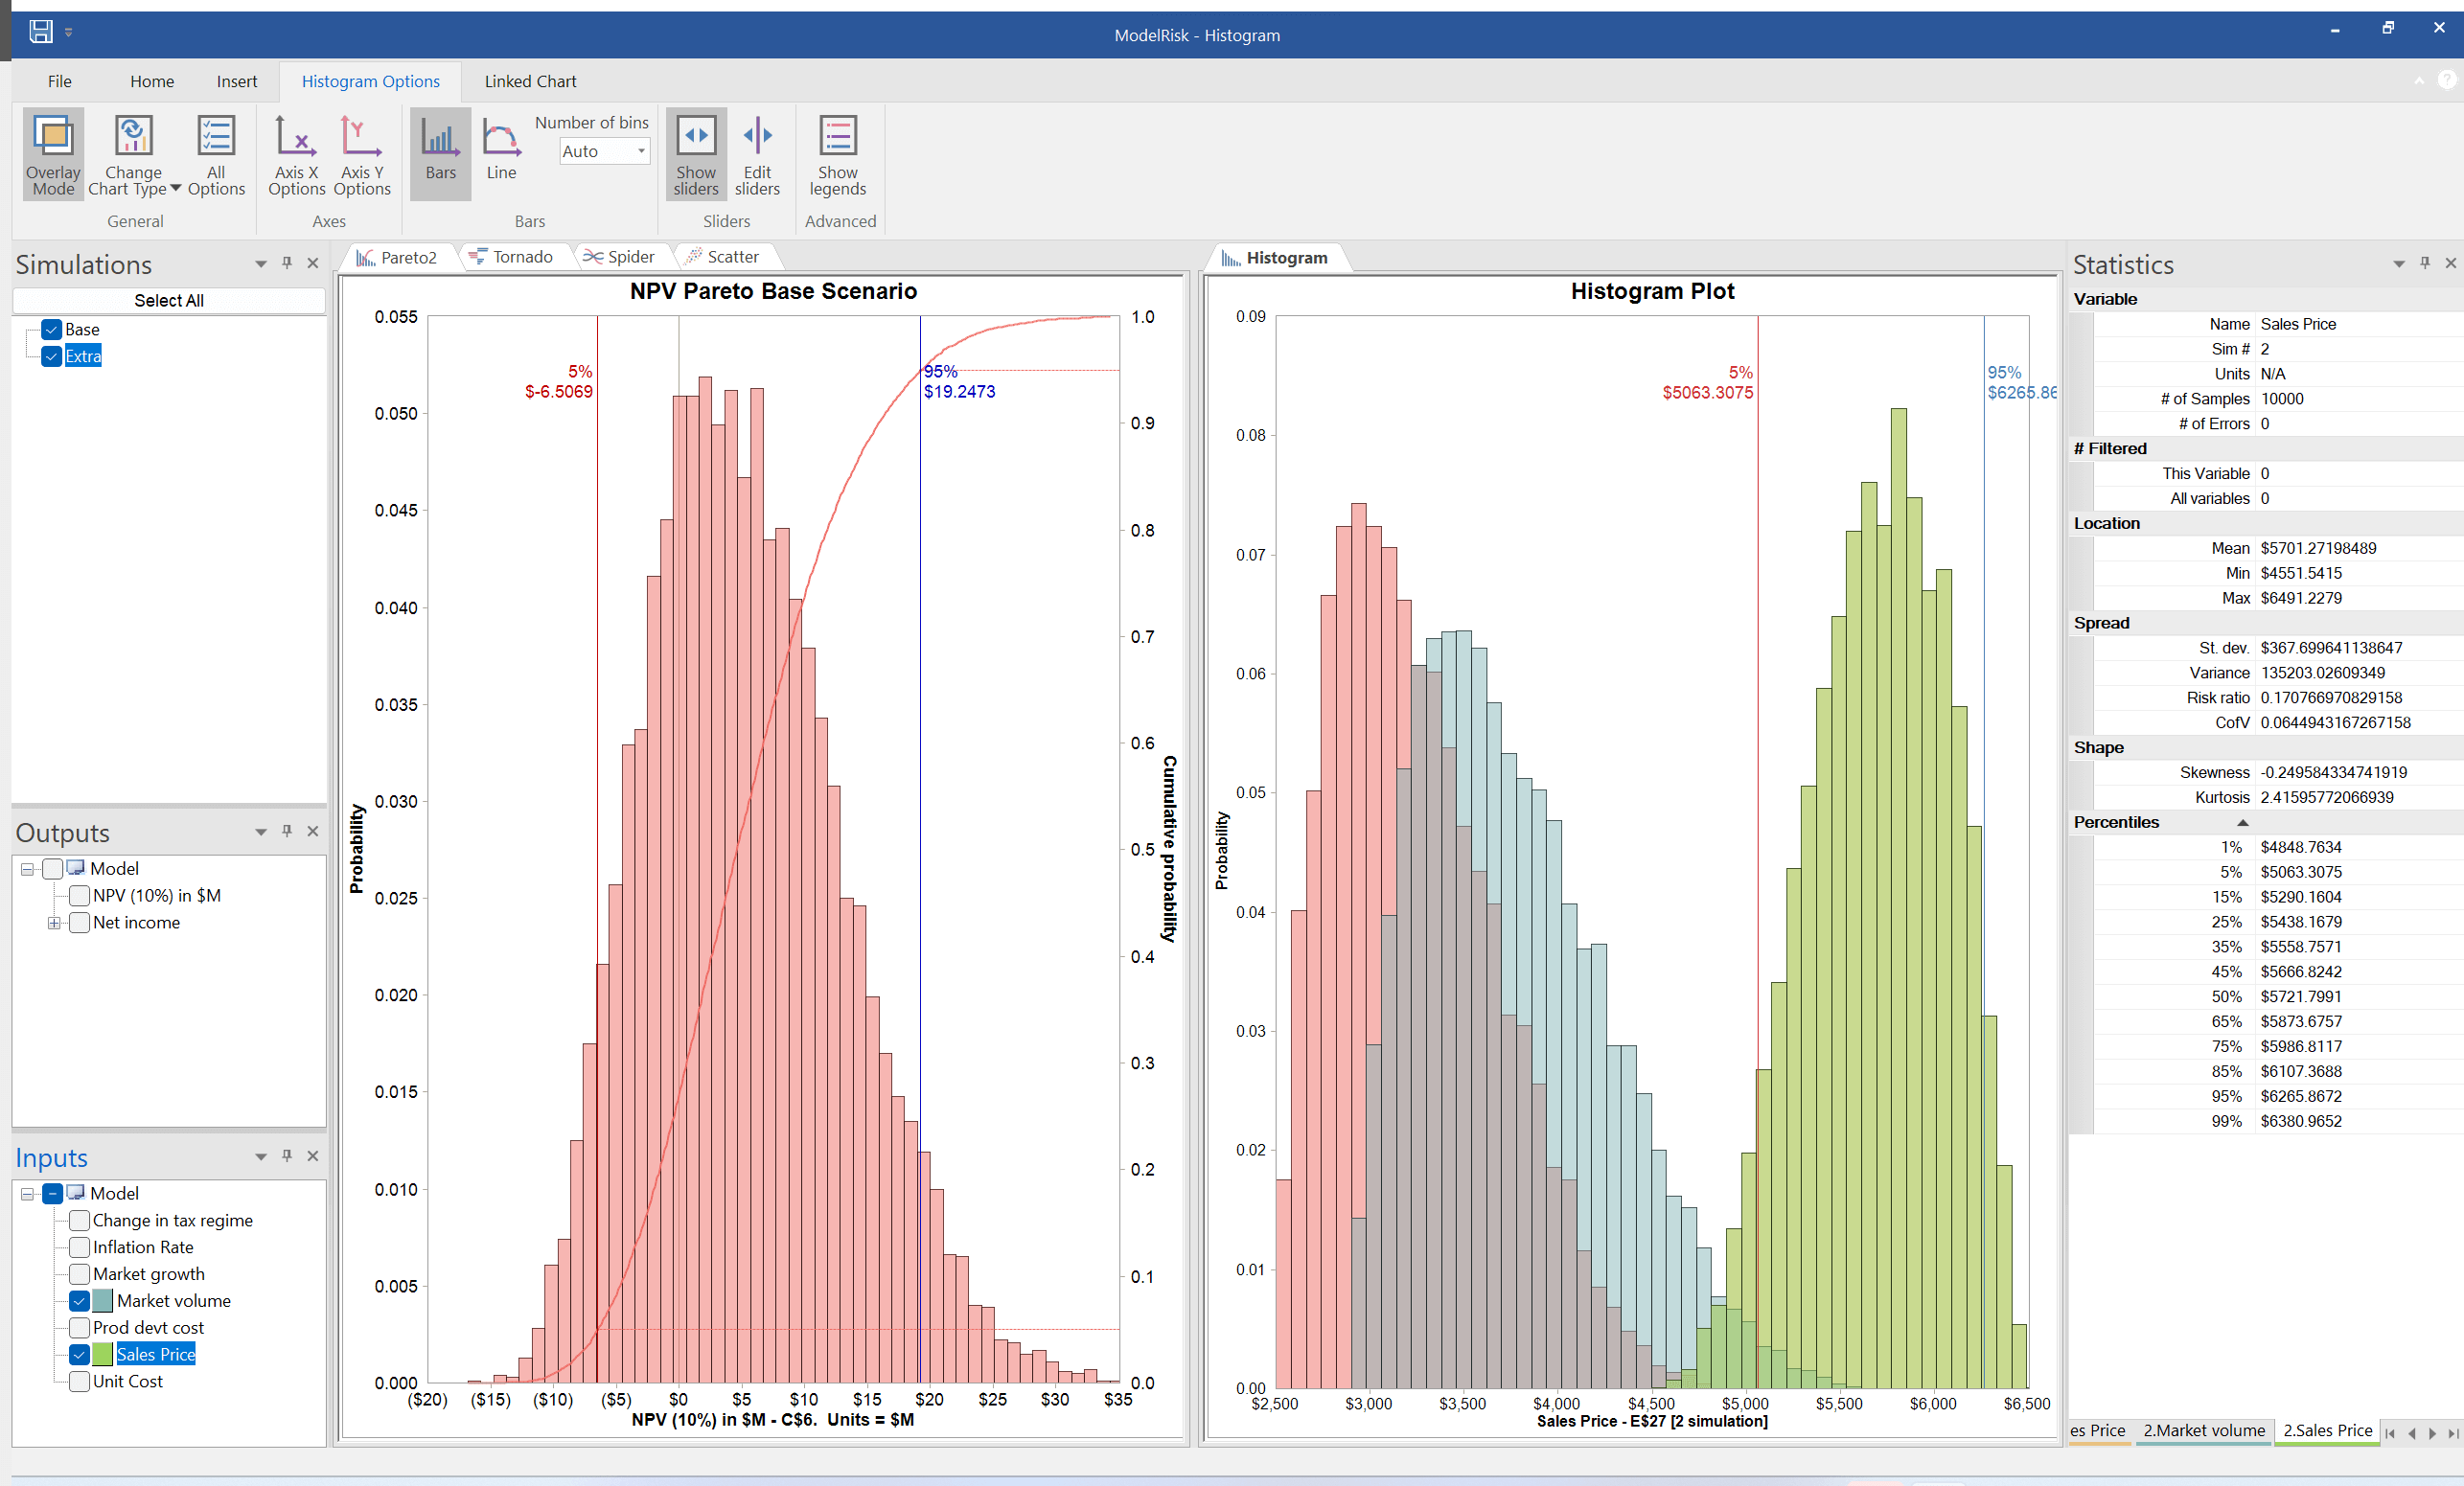 Simulation results in histogram and Pareto plot format